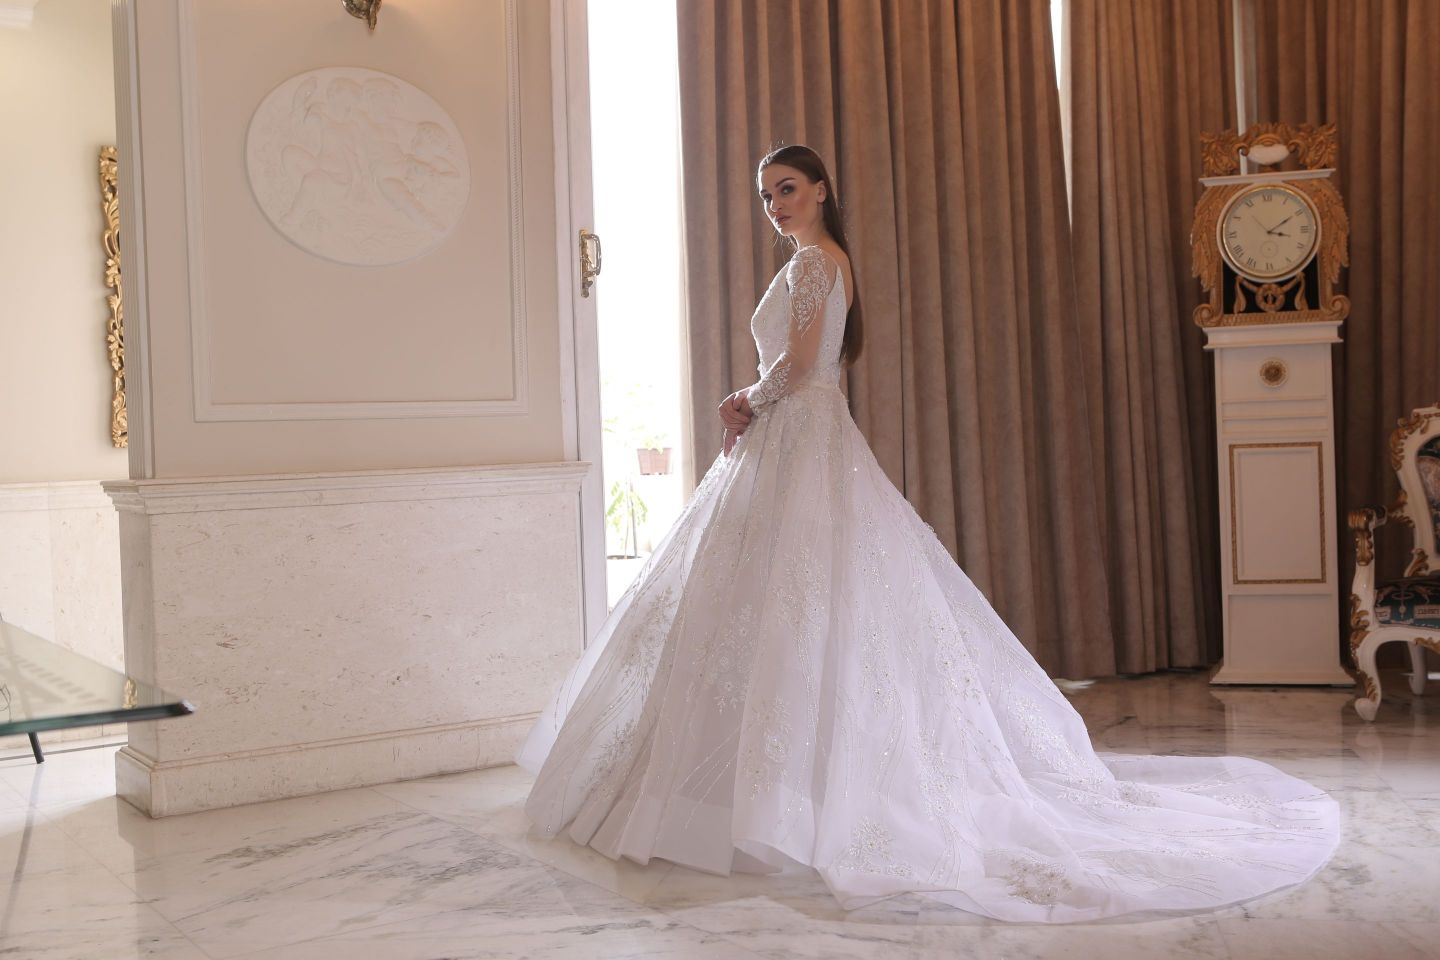 Amit GT - White bridal gown